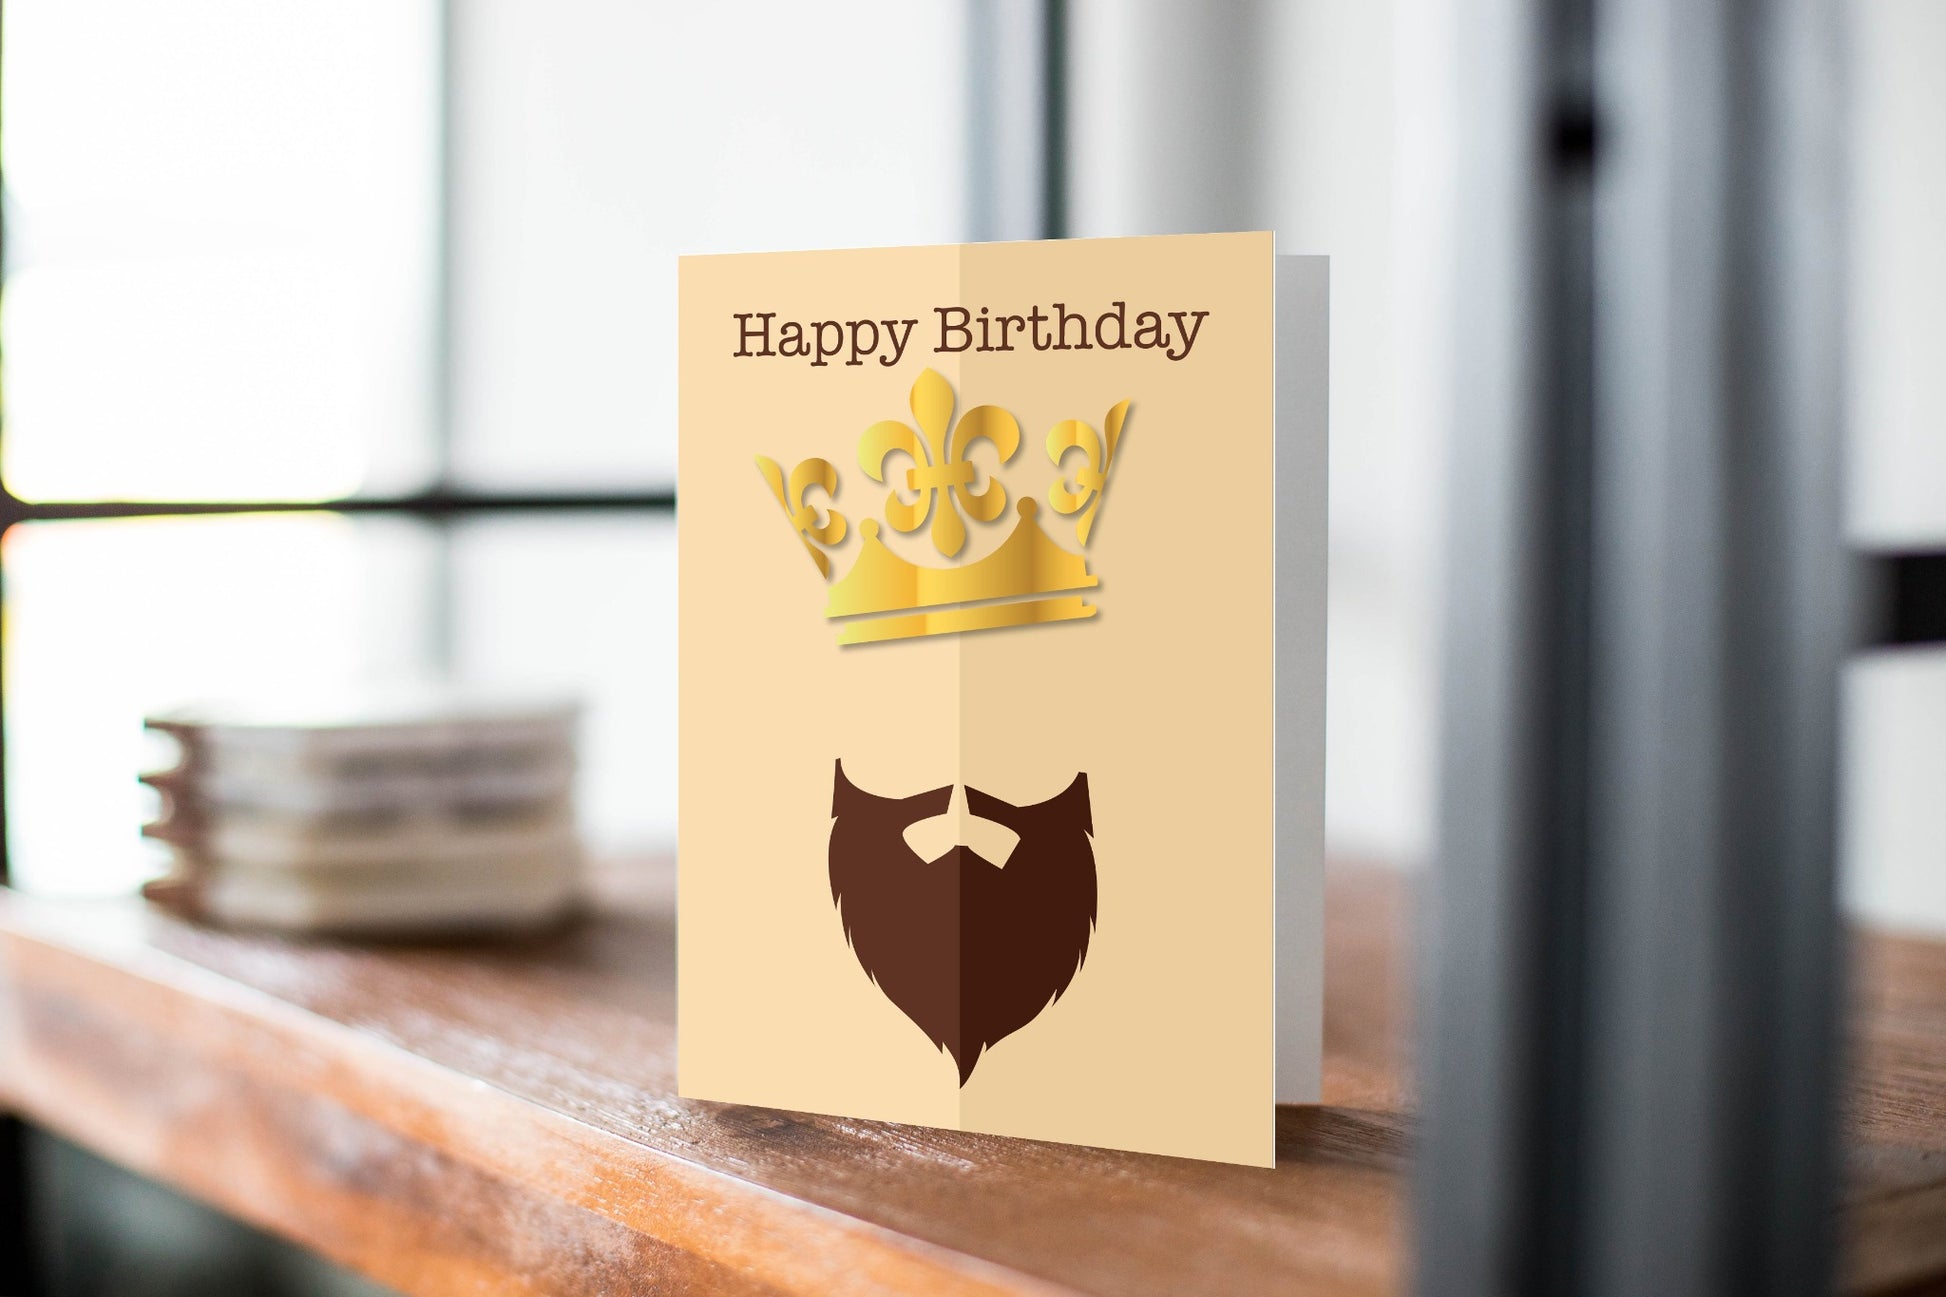 Happy Birthday King - Happy Birthday Greeting Card - King Of Beards